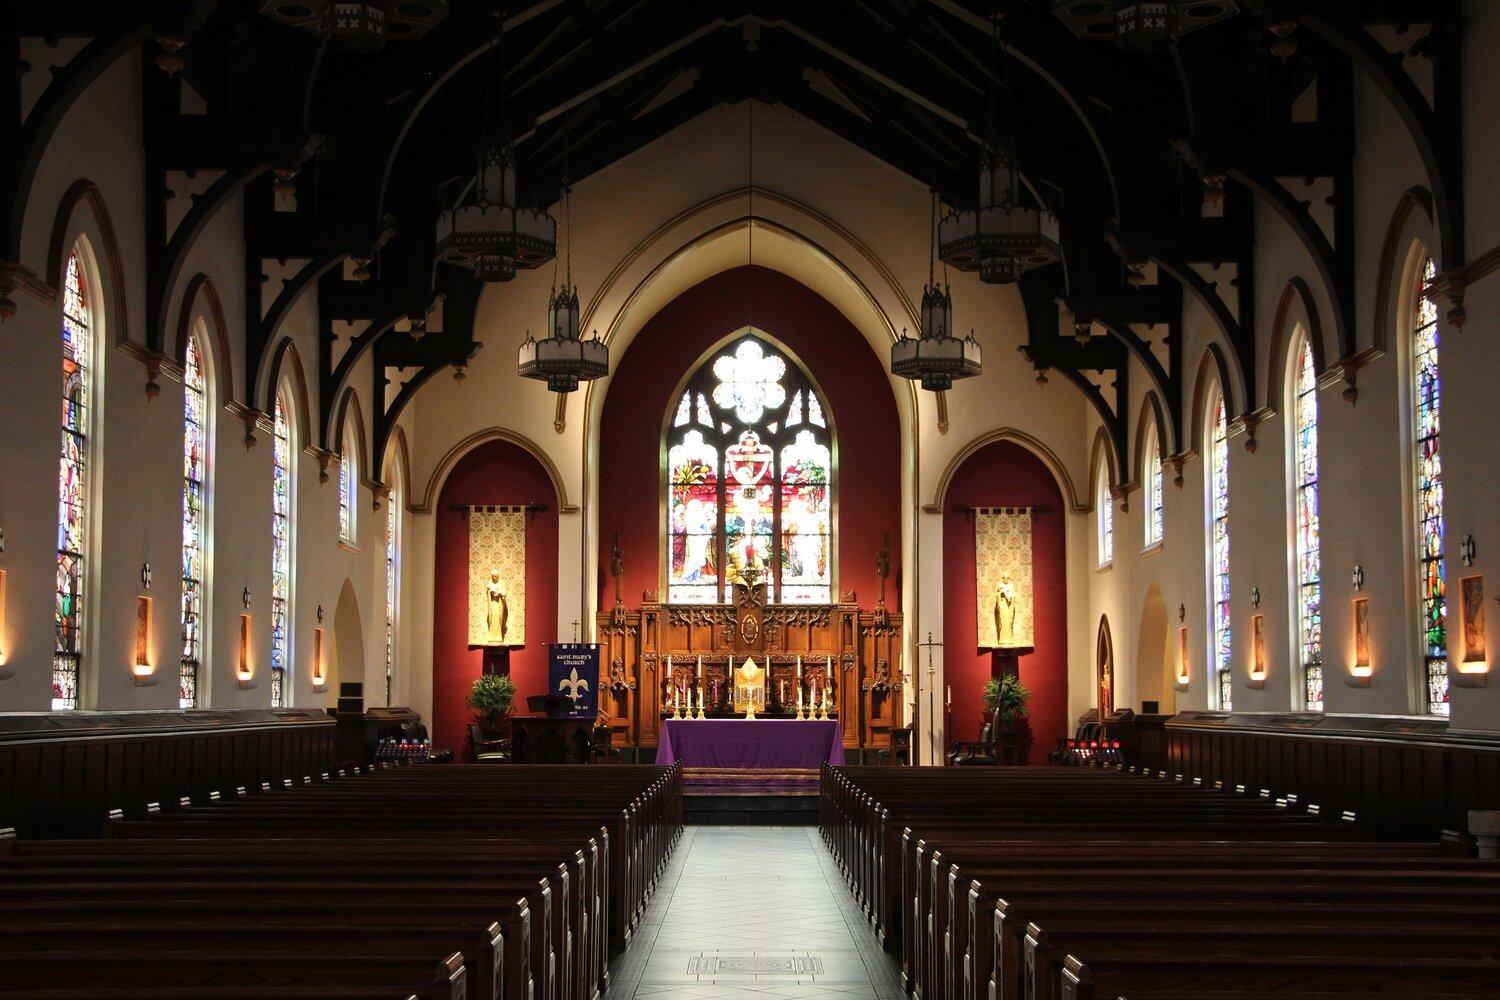 The Interior of St. Mary's Catholic Church in Greenville, South Carolina